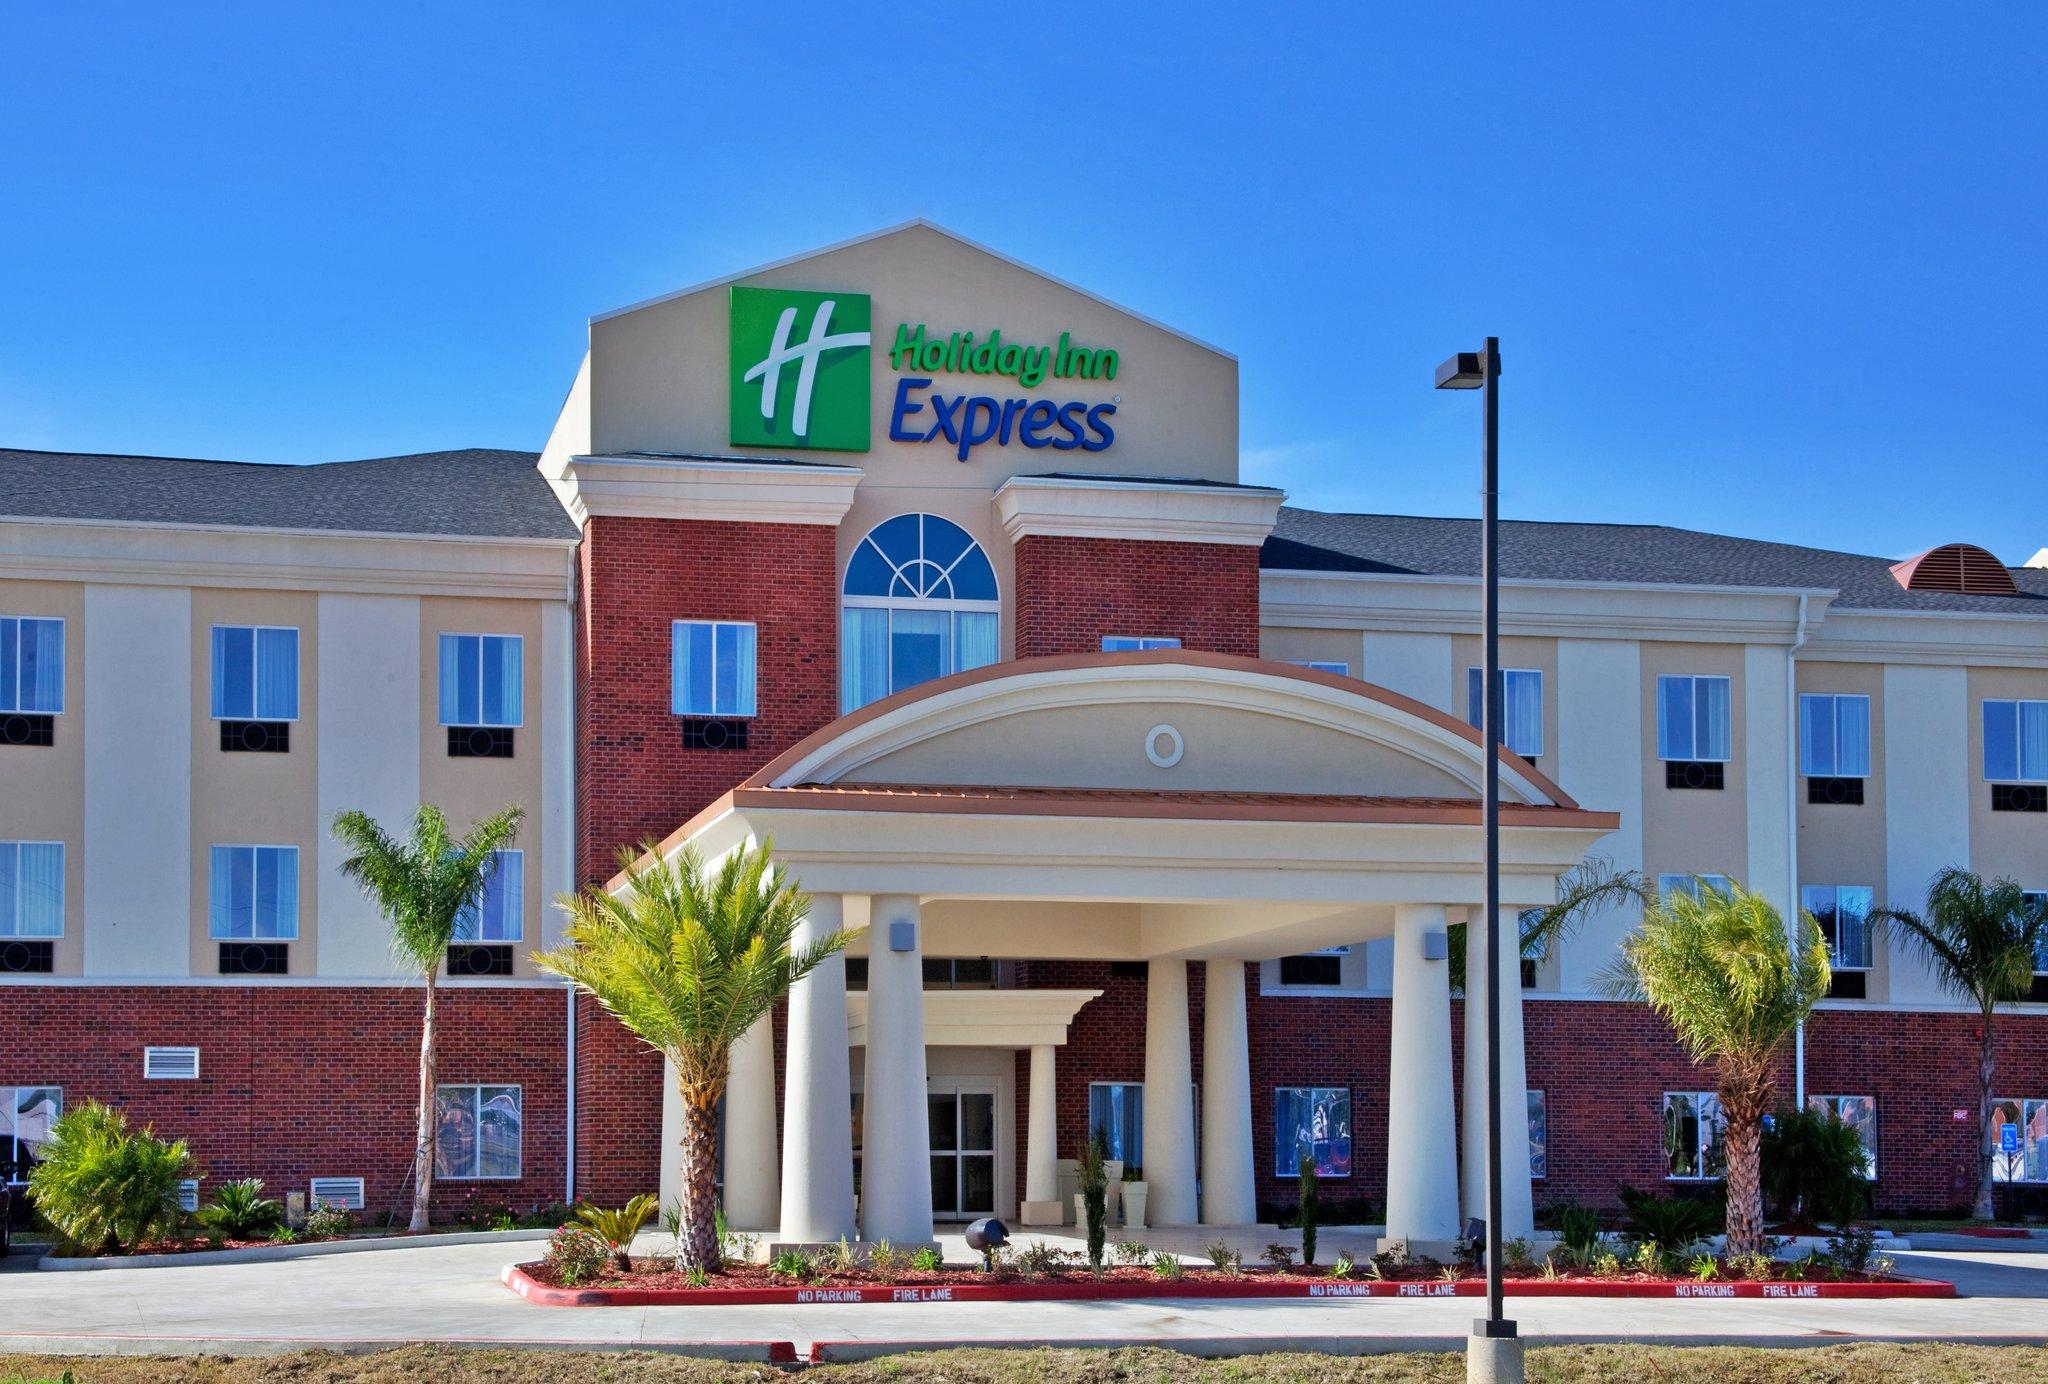 Holiday Inn Express Eunice in Eunice, LA